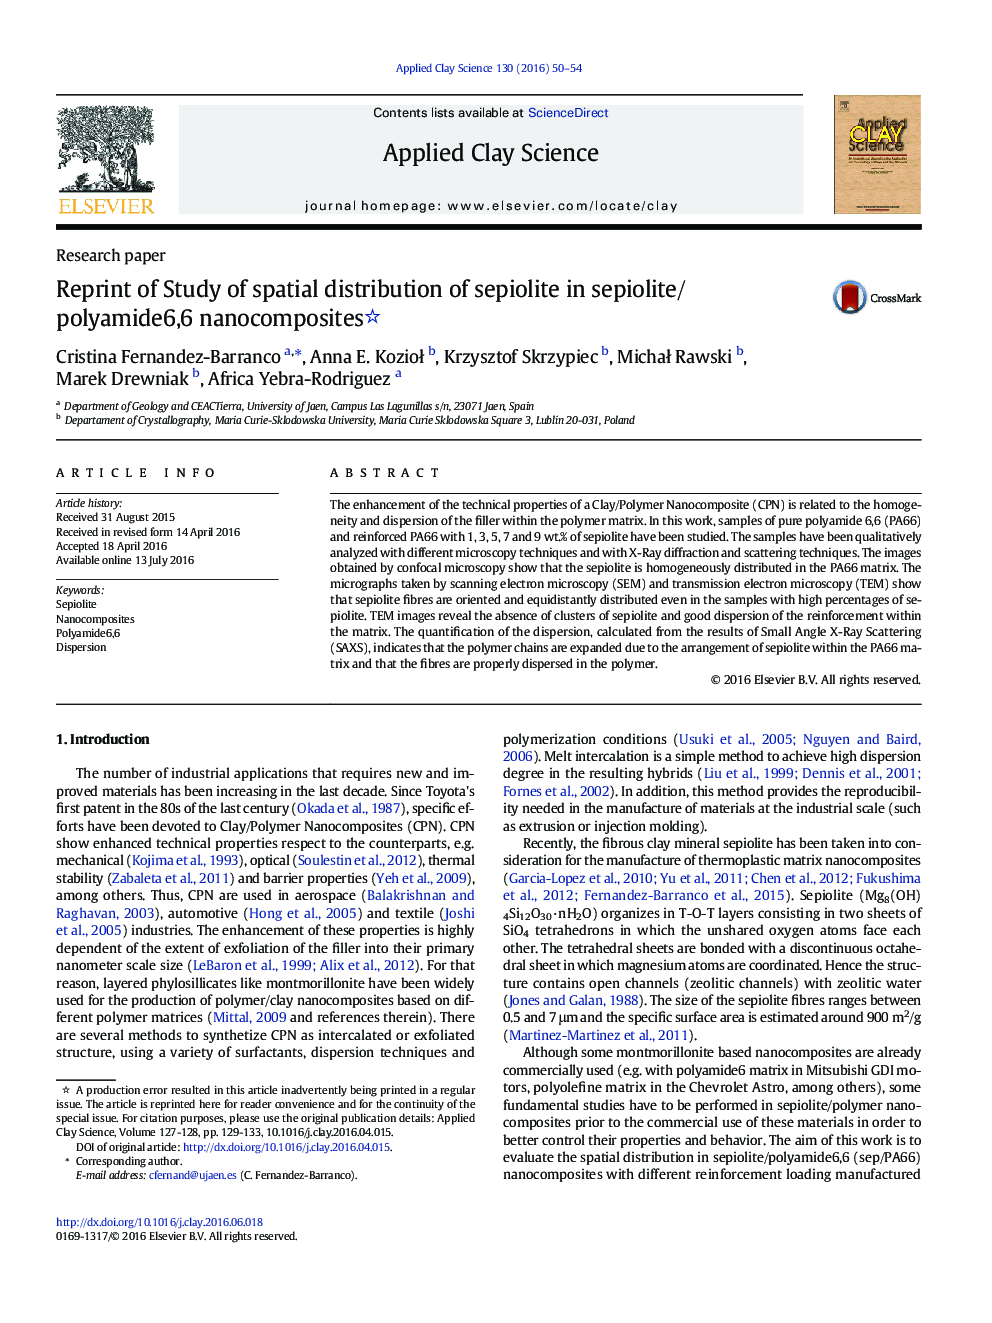 Reprint of Study of spatial distribution of sepiolite in sepiolite/polyamide6,6 nanocomposites 